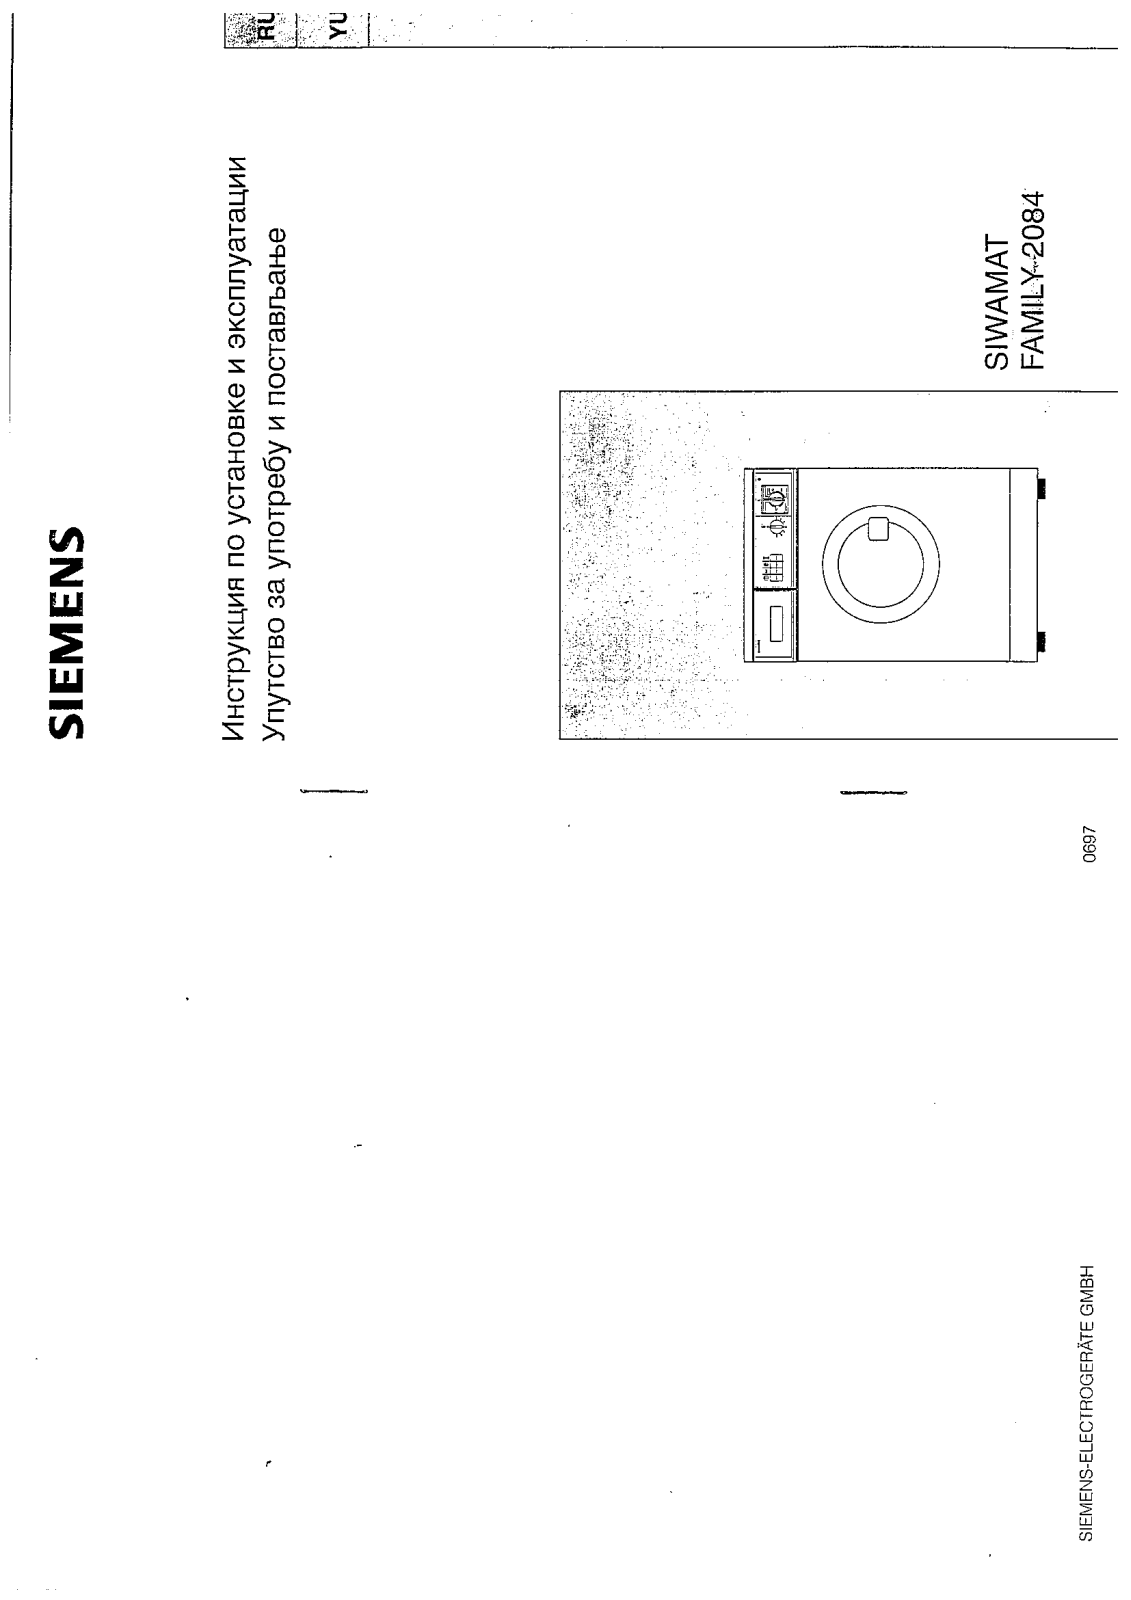 Siemens SIWAMAT 2084 User Manual